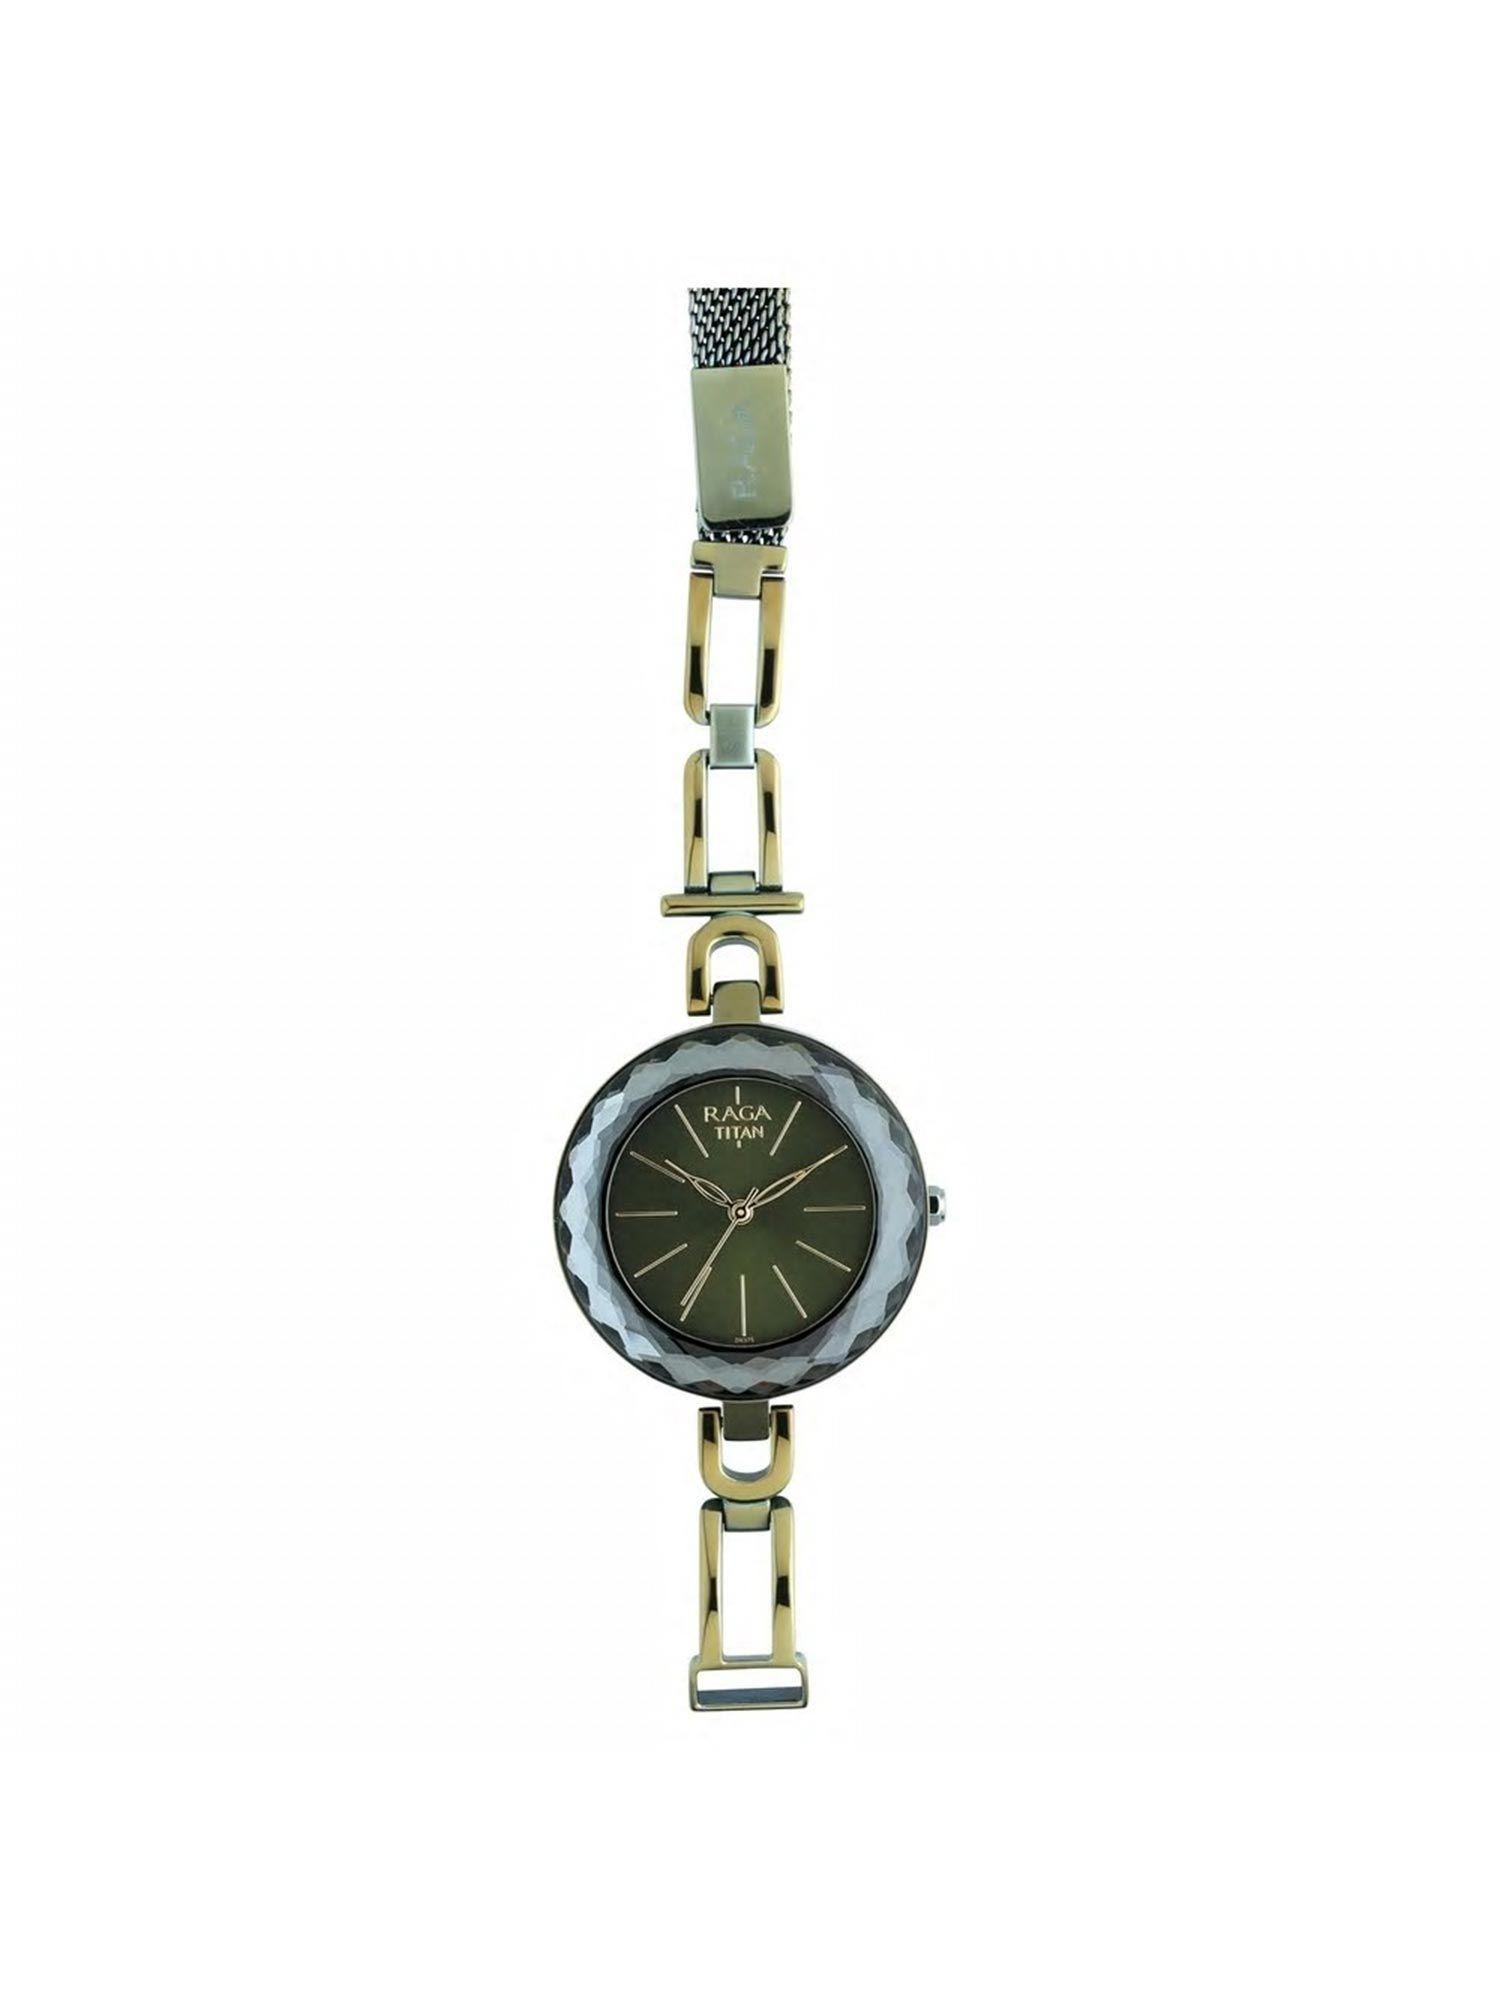 nn95122qm01 green dial analog watch for women